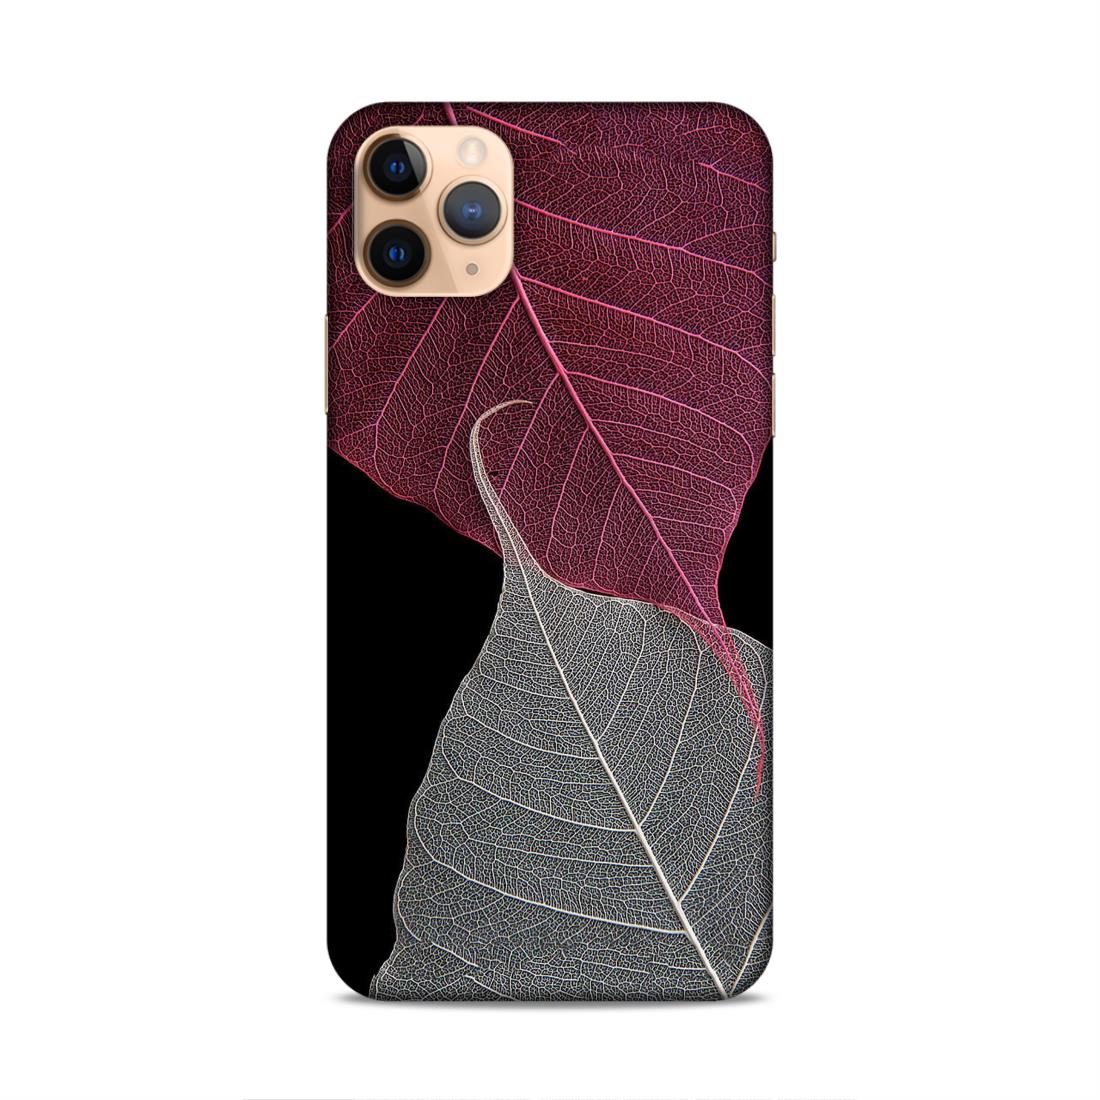 Two Leaf Hard Back Case For Apple iPhone 11 Pro